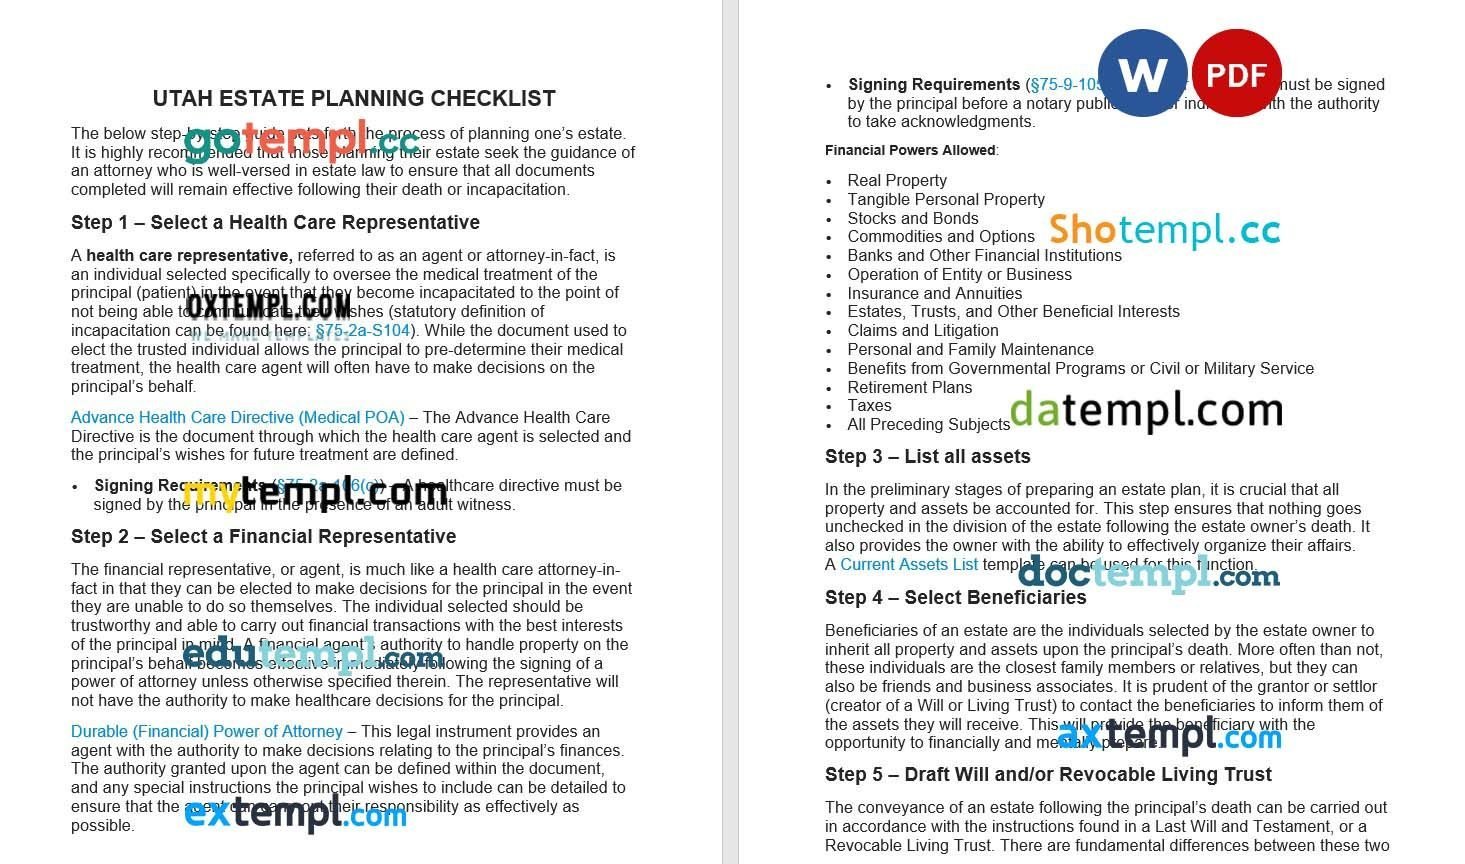 Utah Estate Planning Checklist example, fully editable